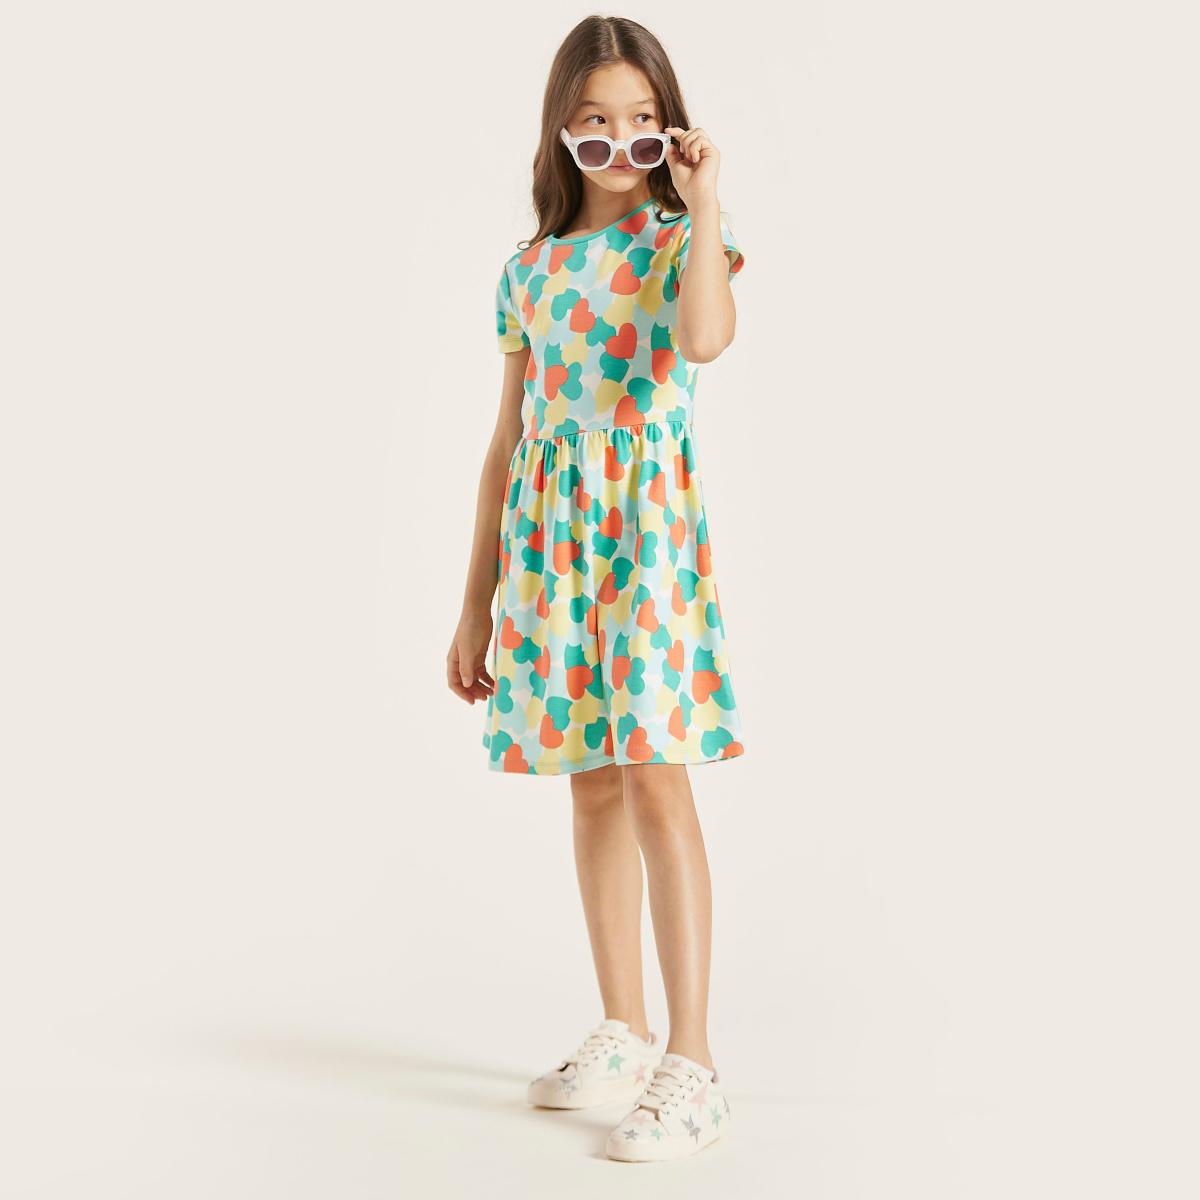 Babyshop Juniors Heart Print Dress with Short Slee